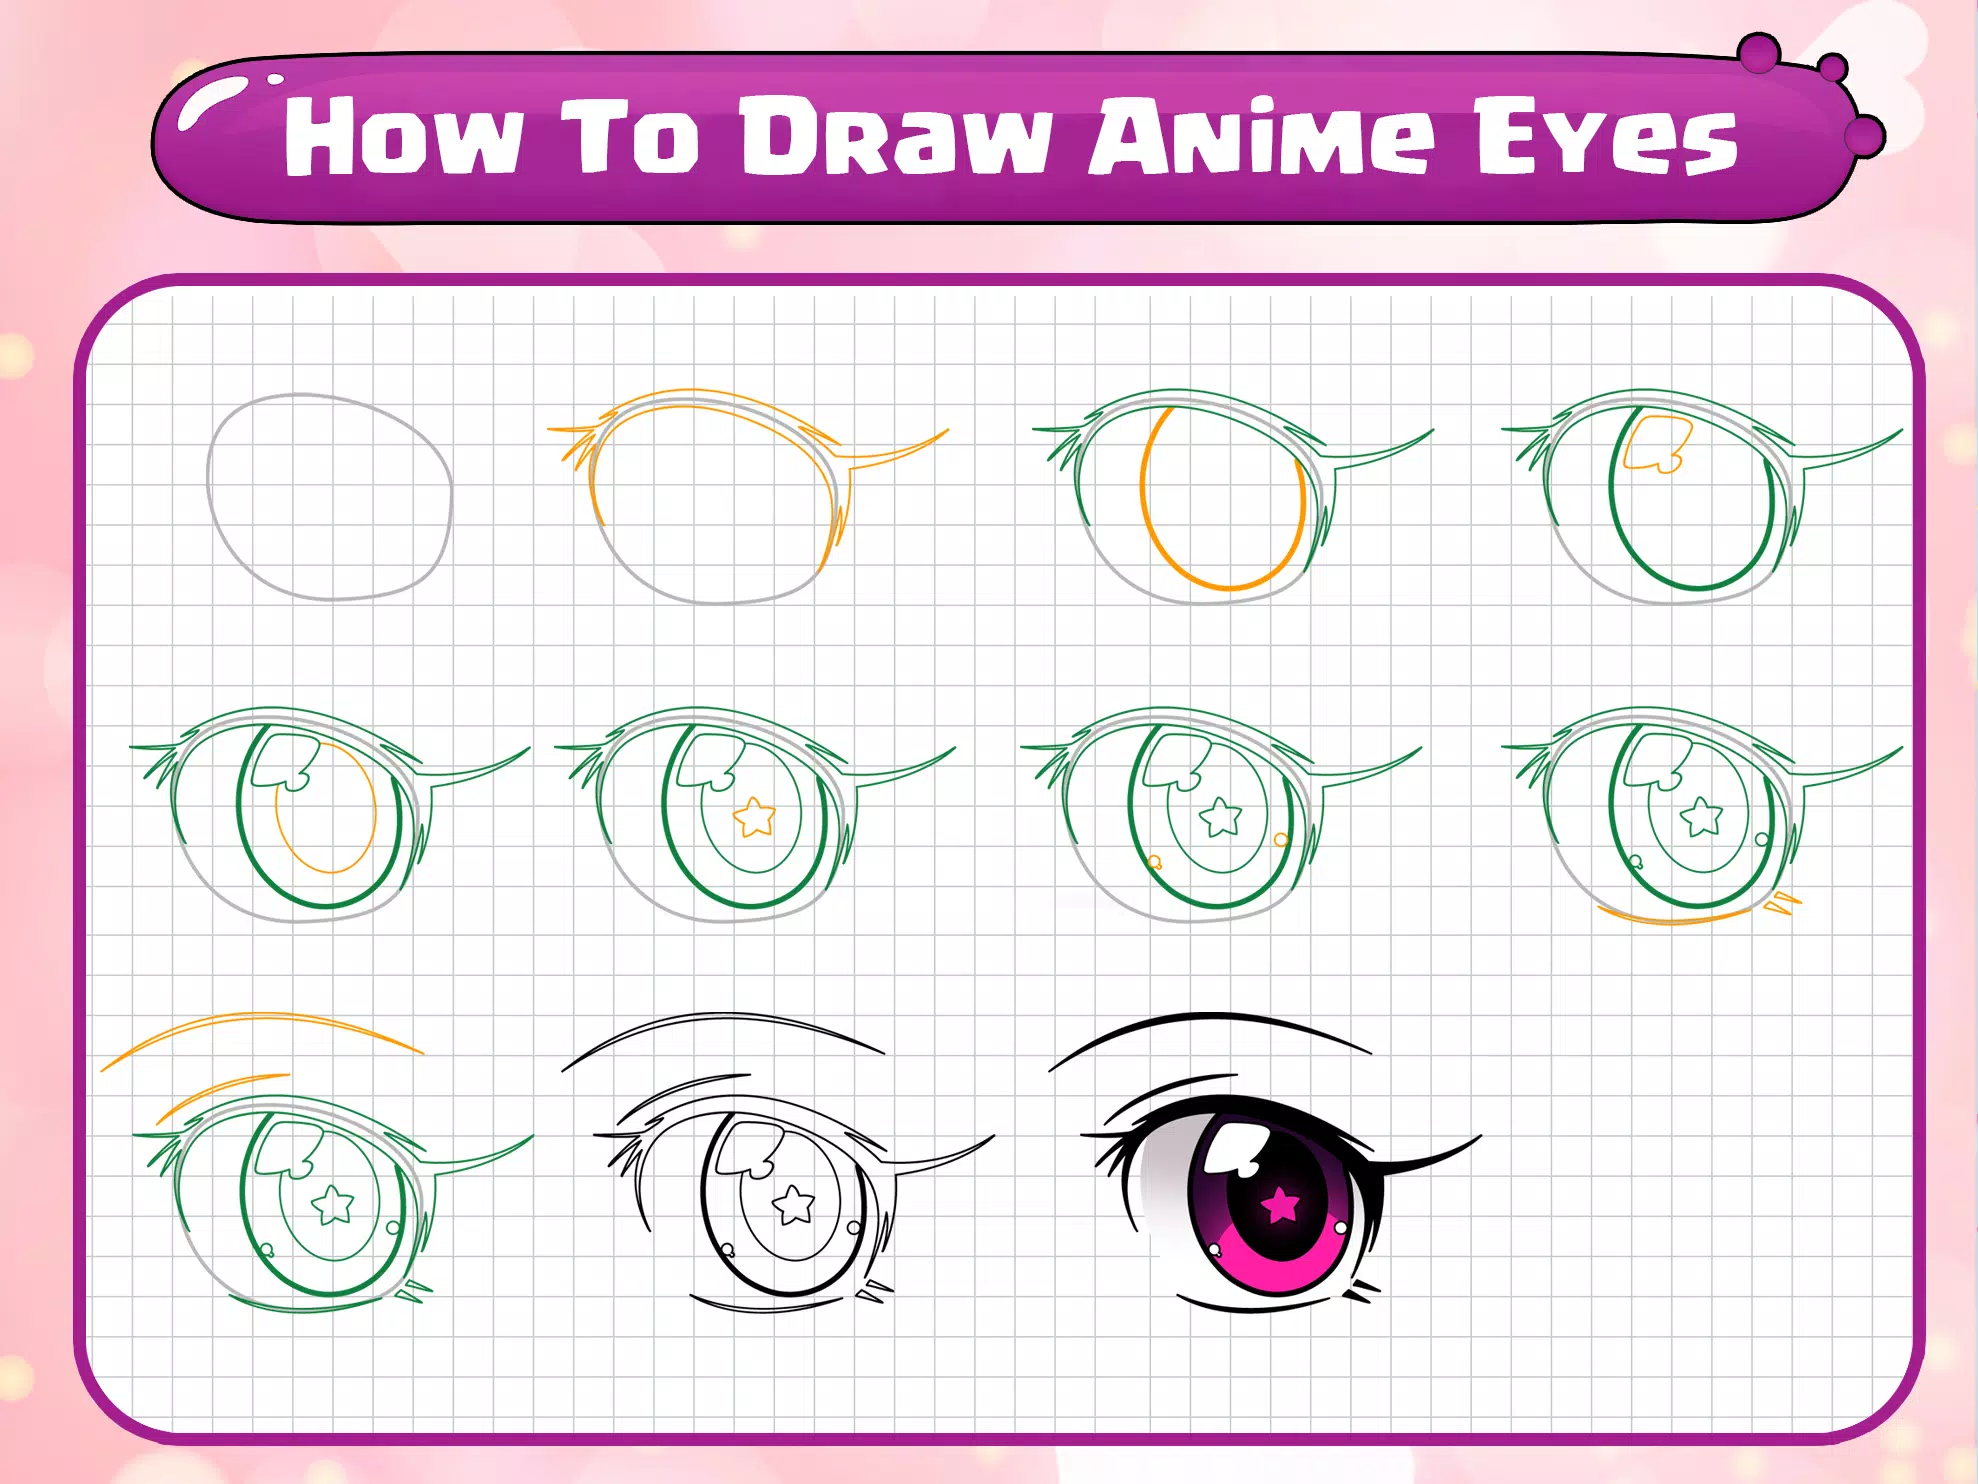 Descarga de APK de Cómo dibujar ojos de anime para Android